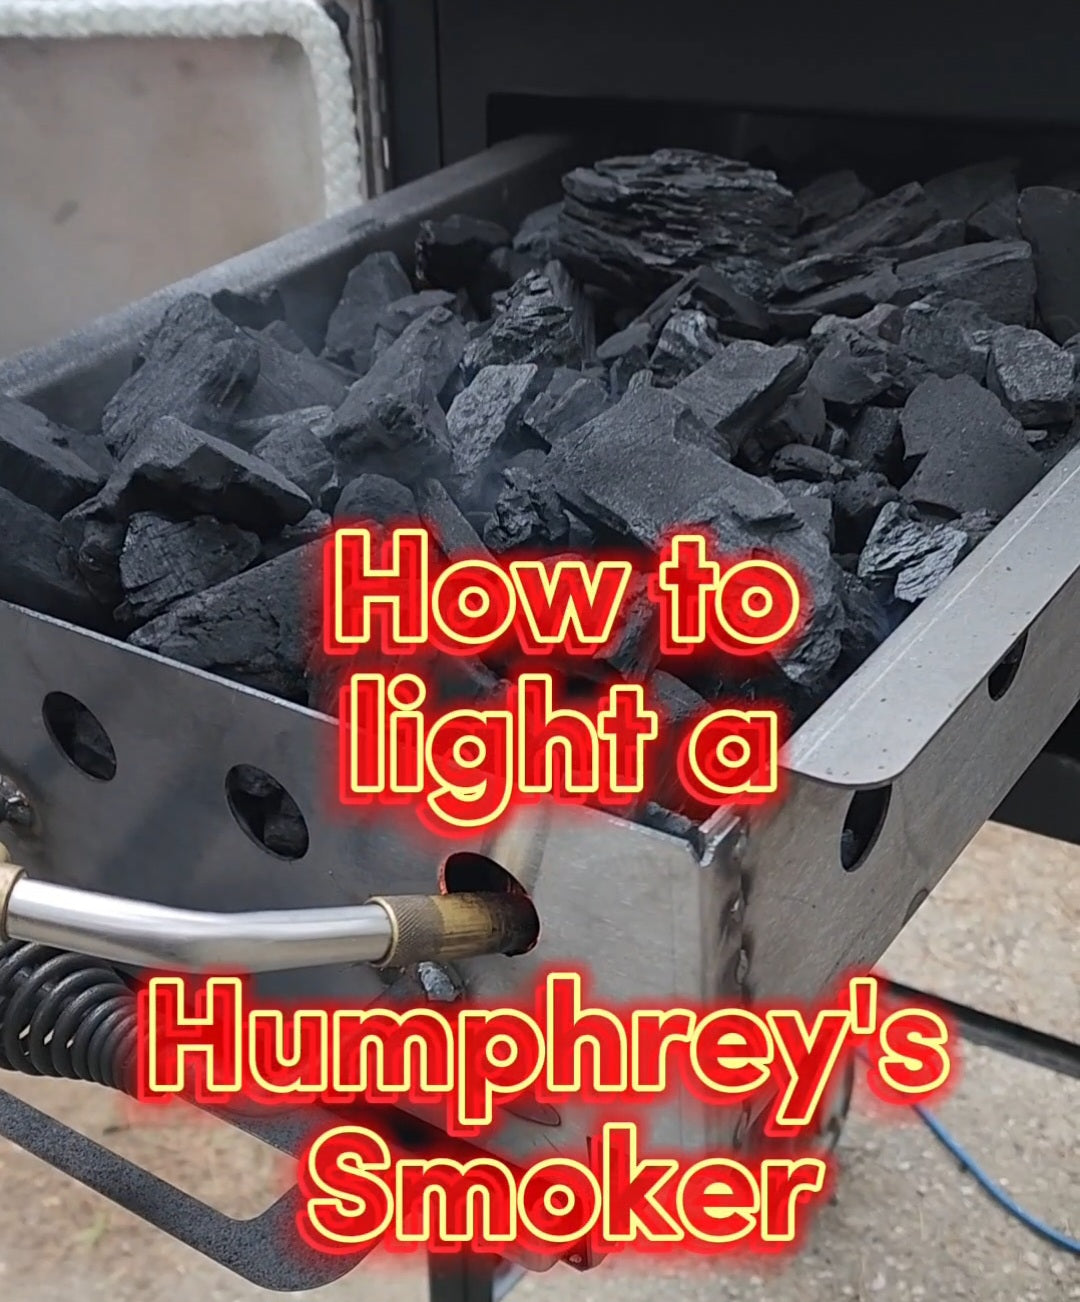 How to light your Humphrey's Smoker - method 1